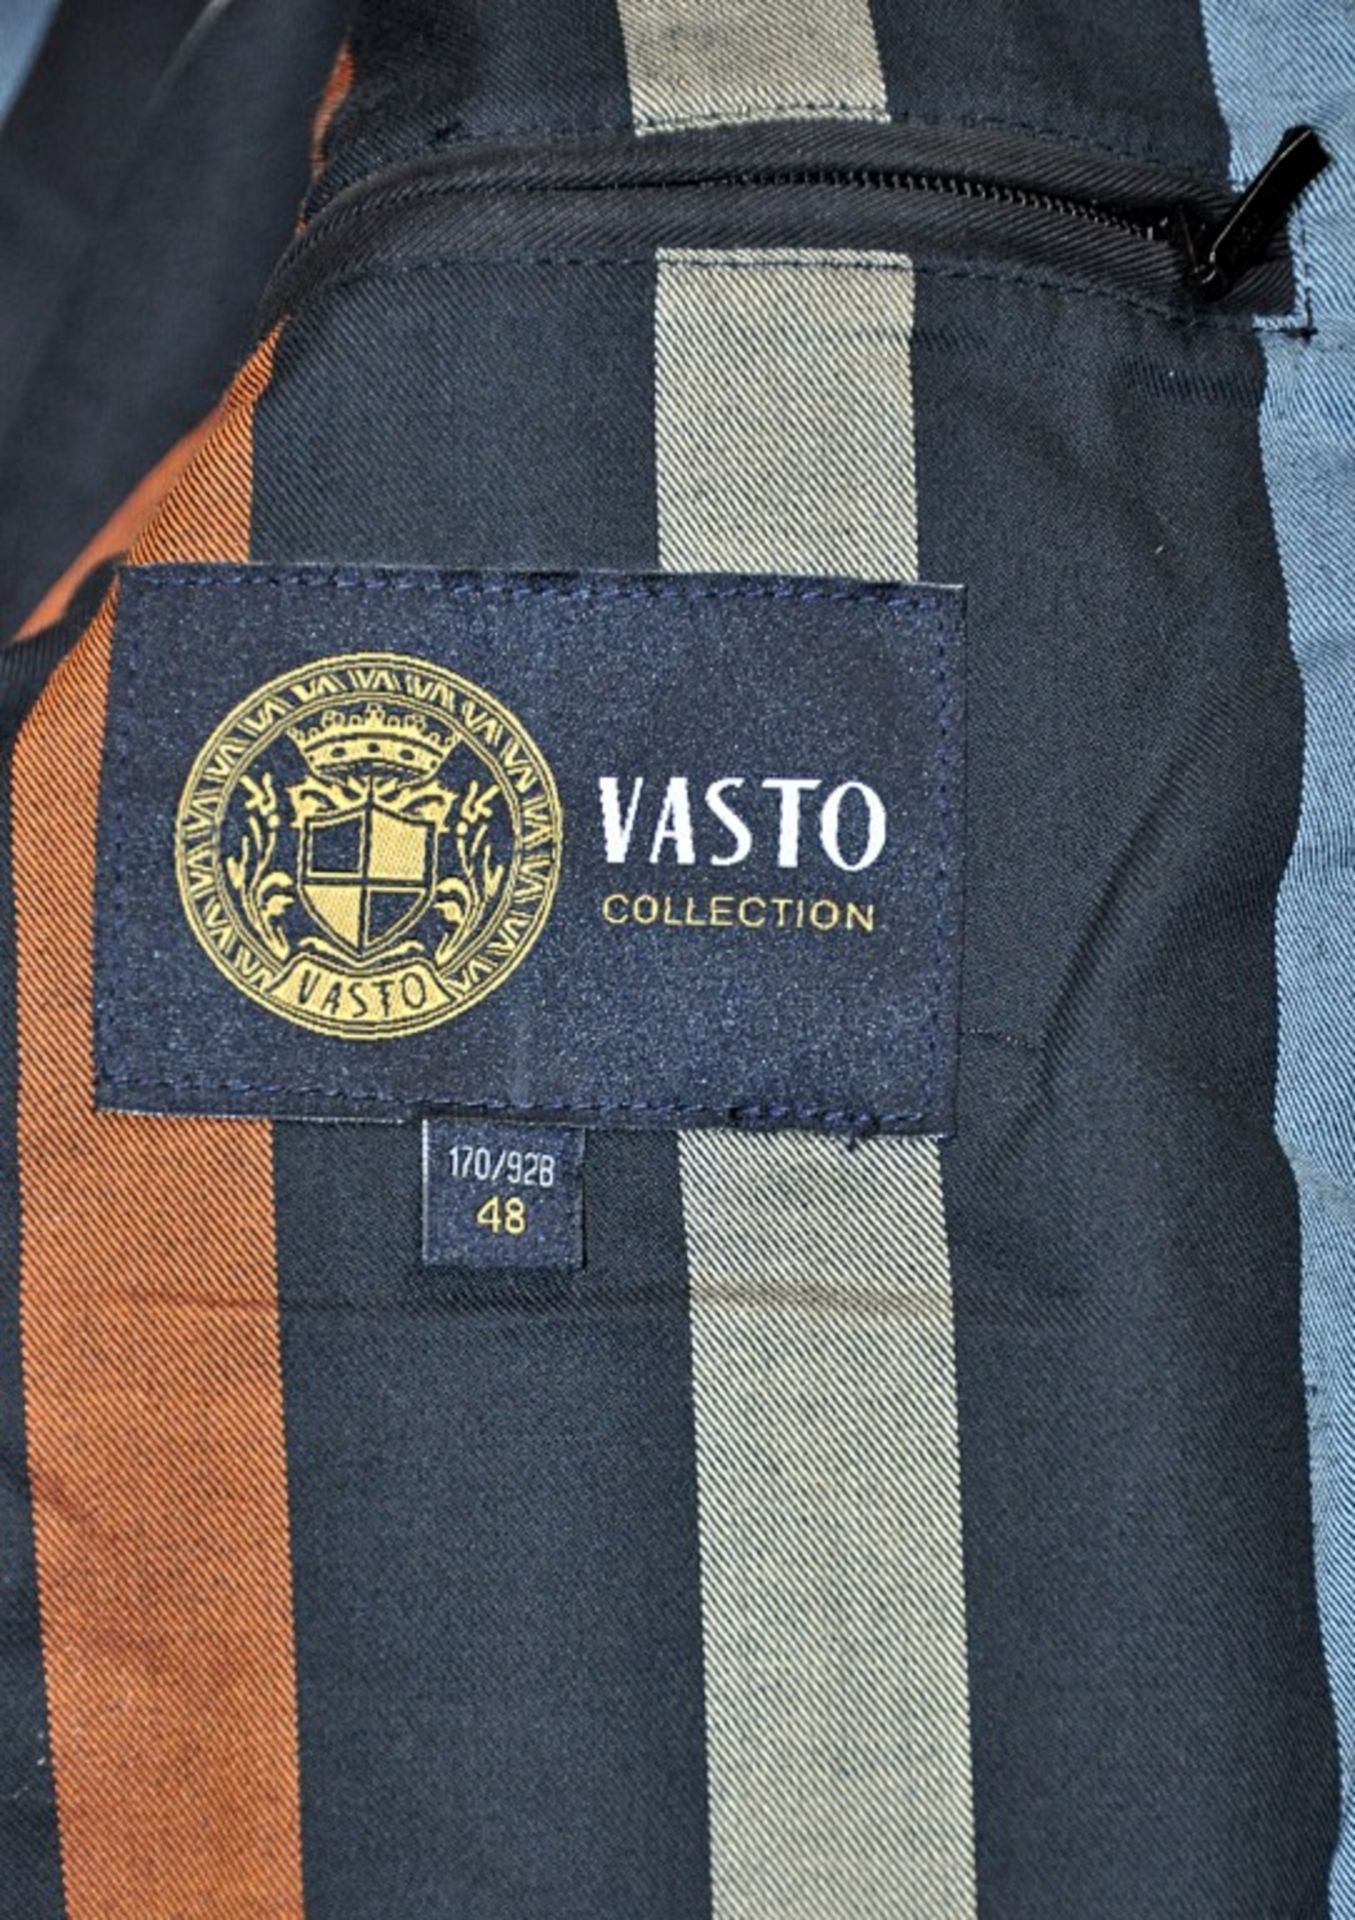 1 x Men's Long Sleeve Casual Jacket By International Luxury Brand "Vasto" (BAJ72241) – Size: Large – - Image 4 of 6